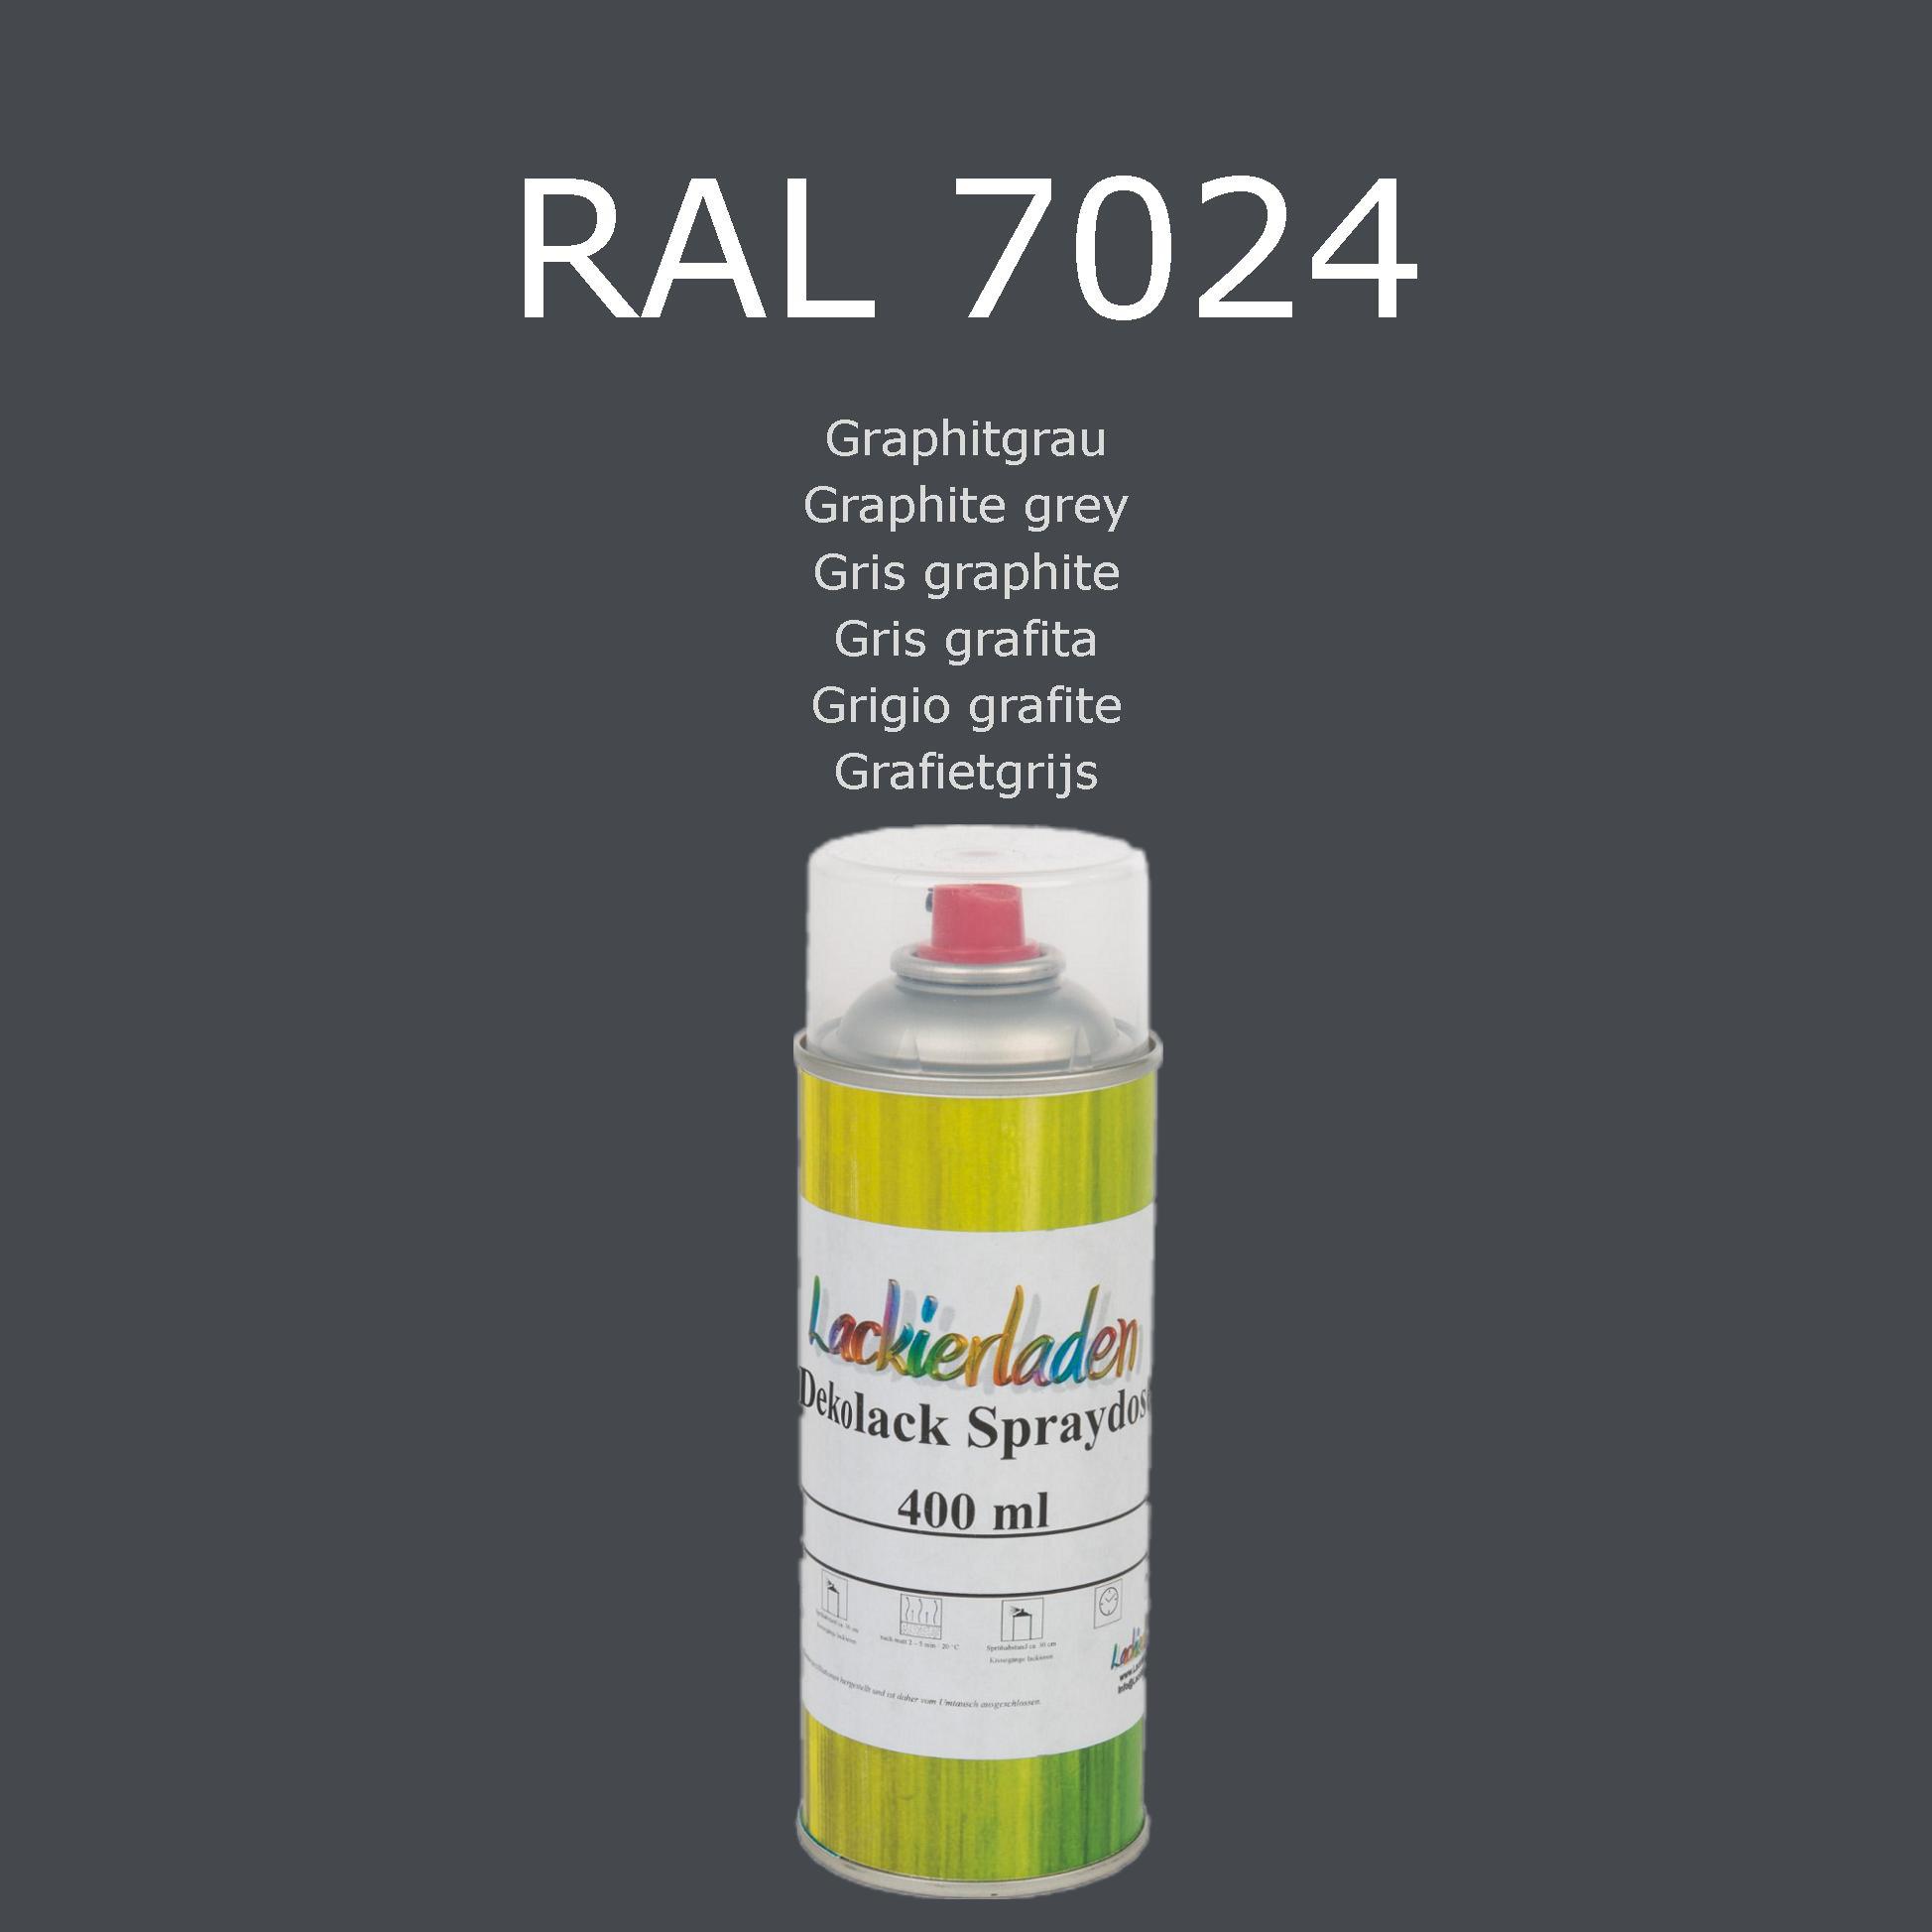 Dekolack Spraydose 400 ml RAL 7024 Graphitgrau Graphite grey Gris graphite Gris grafita Grigio grafite Grafietgrijs | Decolack Lackspray Sprüh Dose